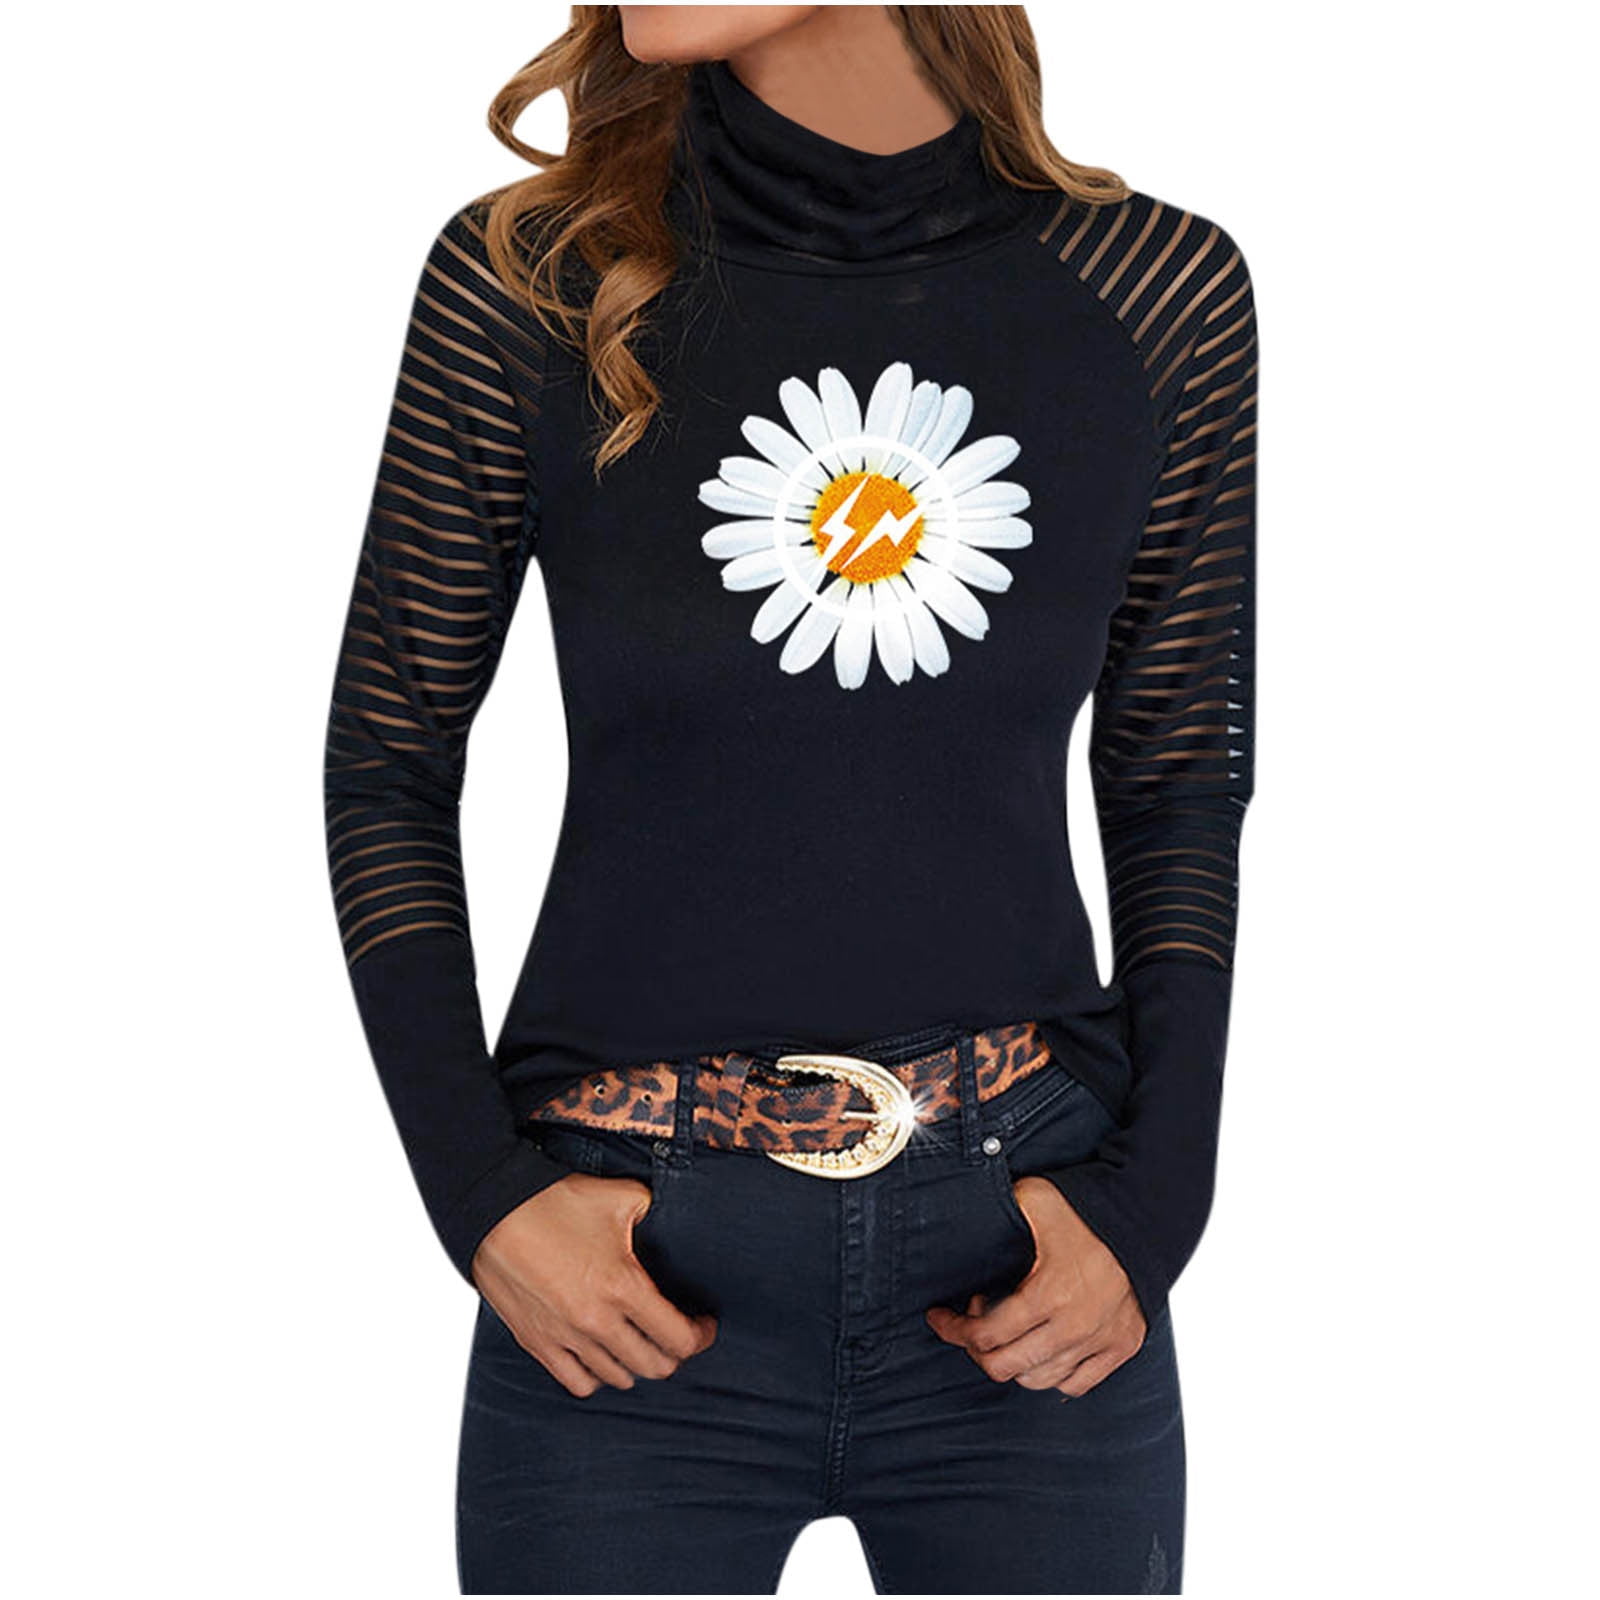 HAPIMO Savings Women's Long Sleeve Shirts Daisy Graphic Print